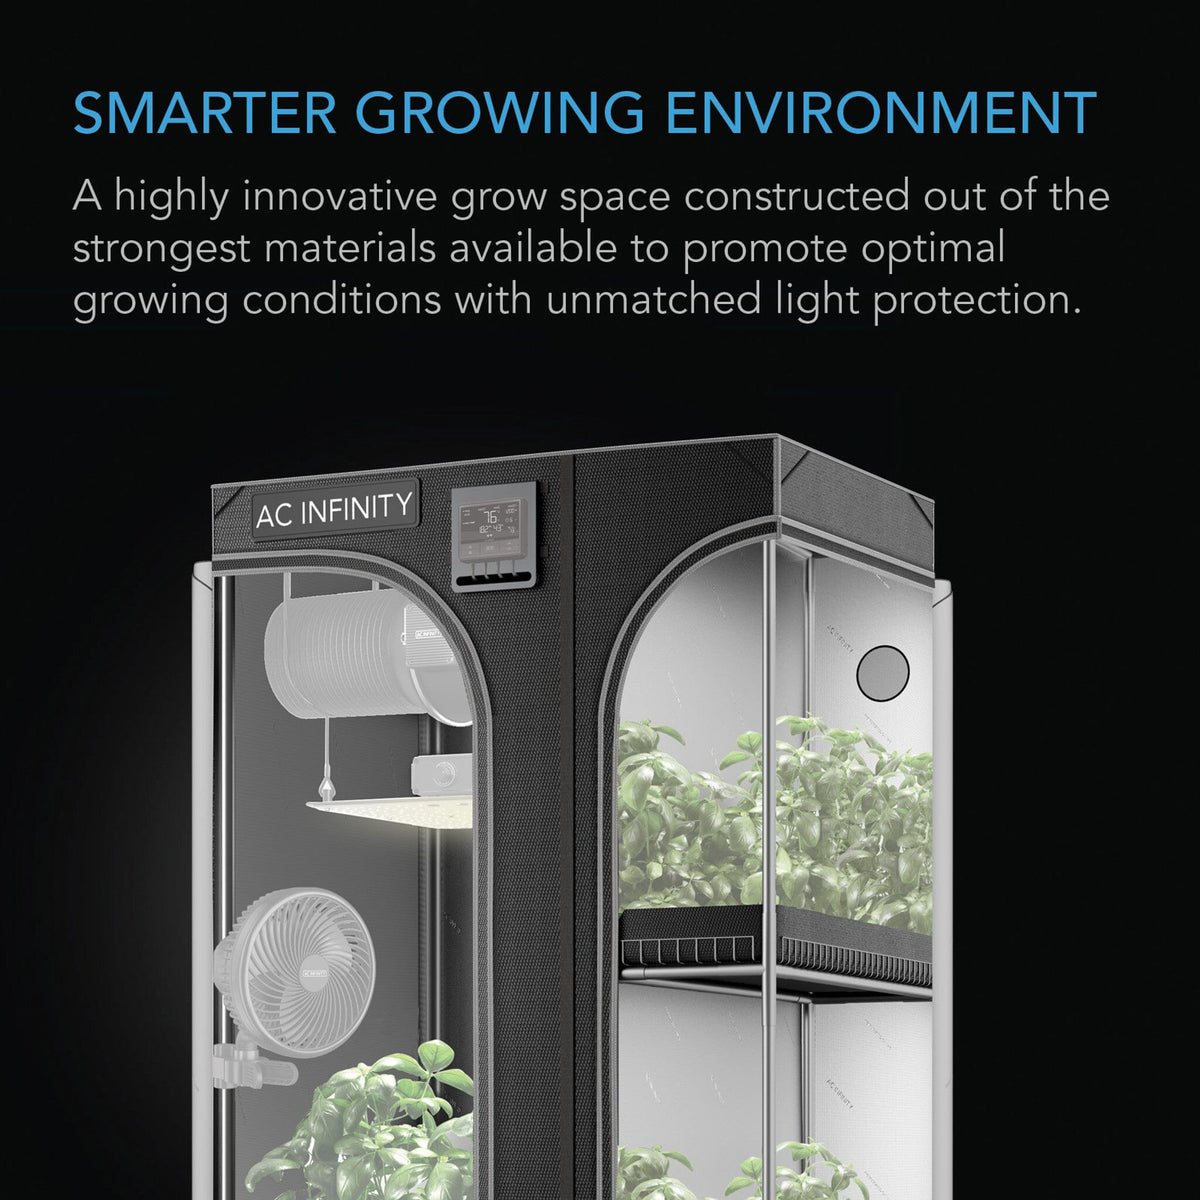 Smarter Growing Environment